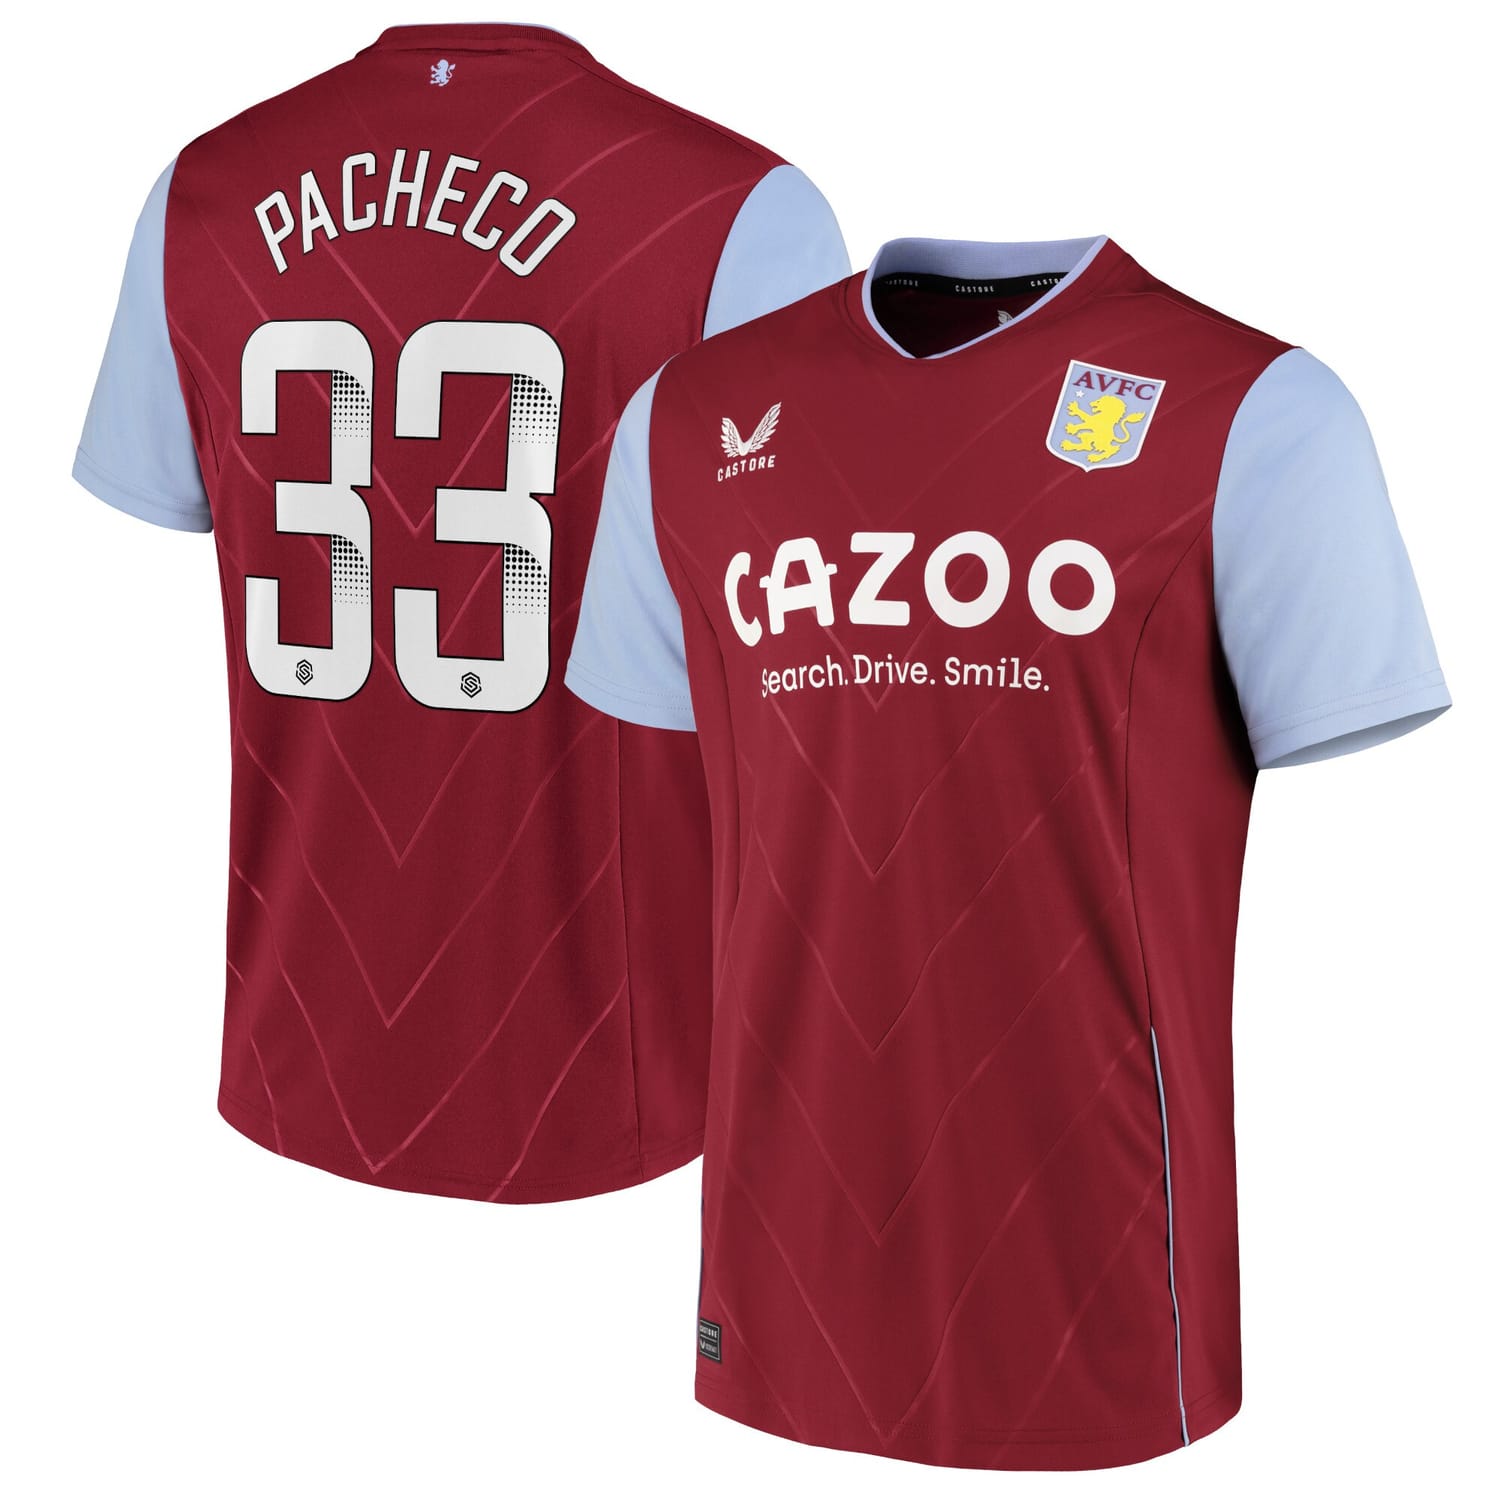 Premier League Aston Villa Home WSL Jersey Shirt 2022-23 player Mayumi Pacheco 33 printing for Men